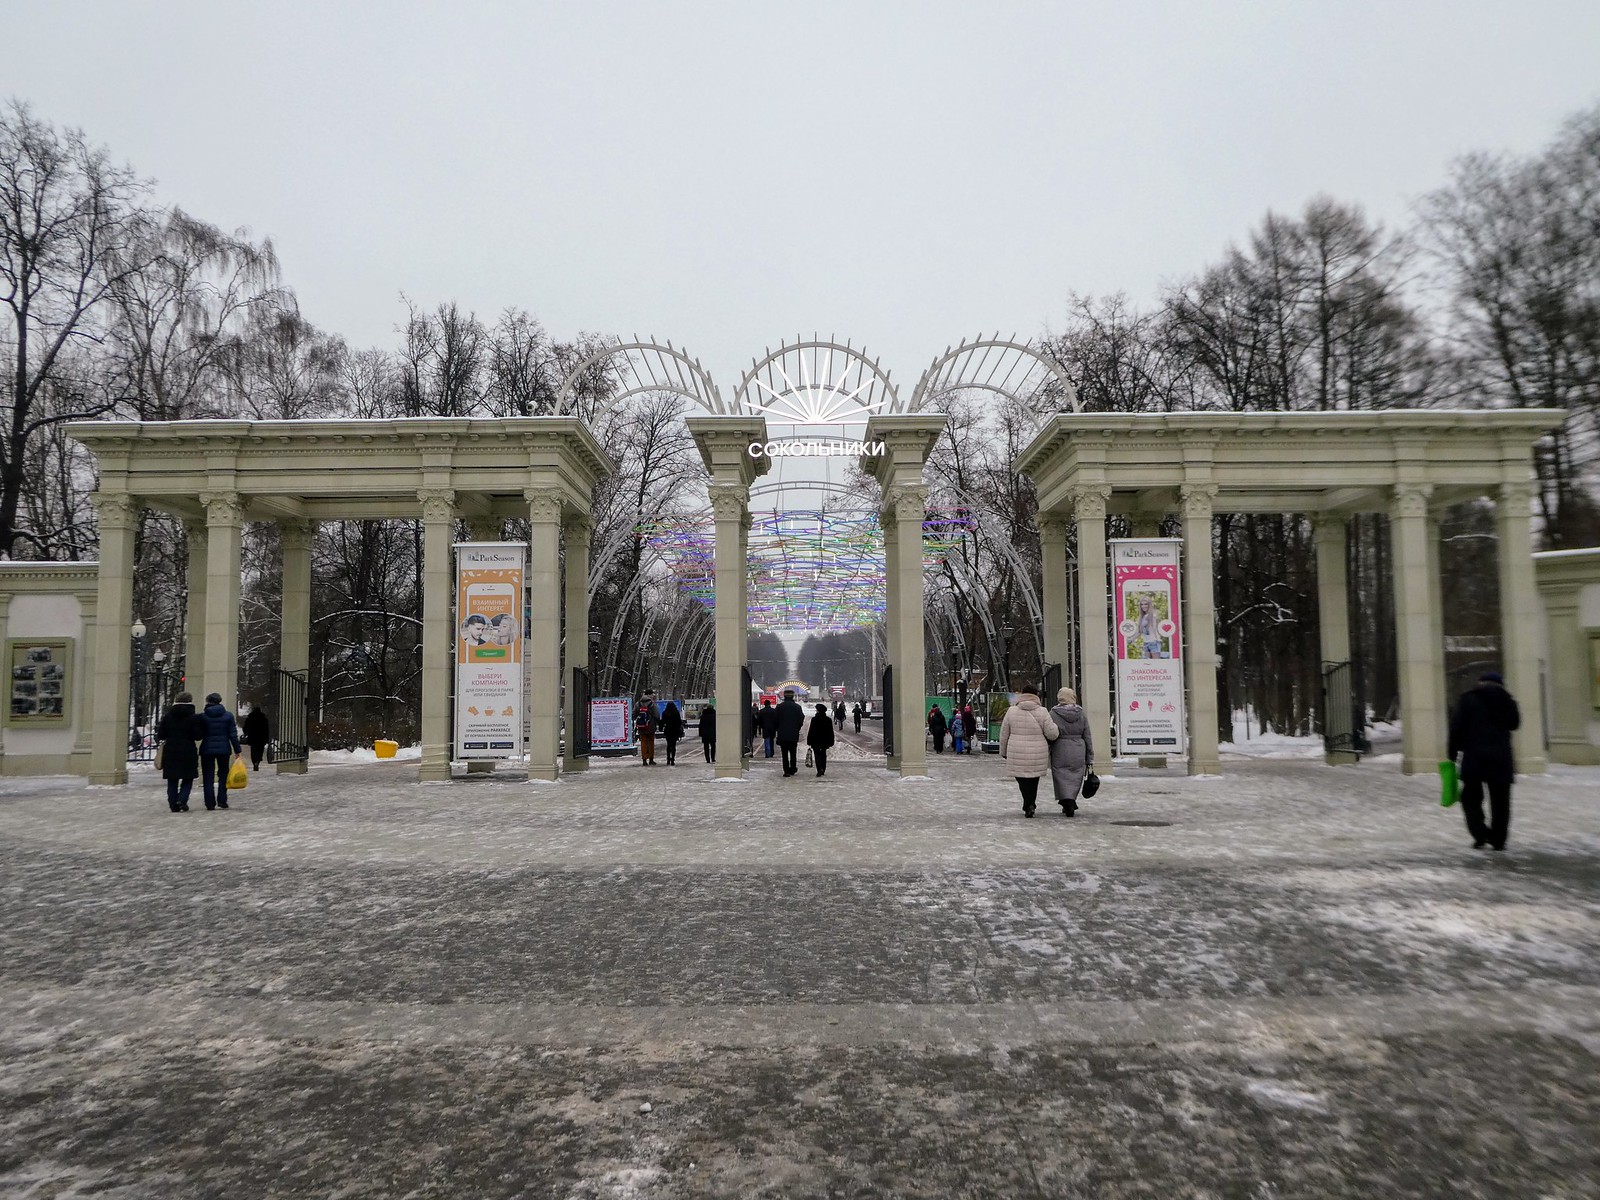 Entrance to Sokolniki Park, Moscow